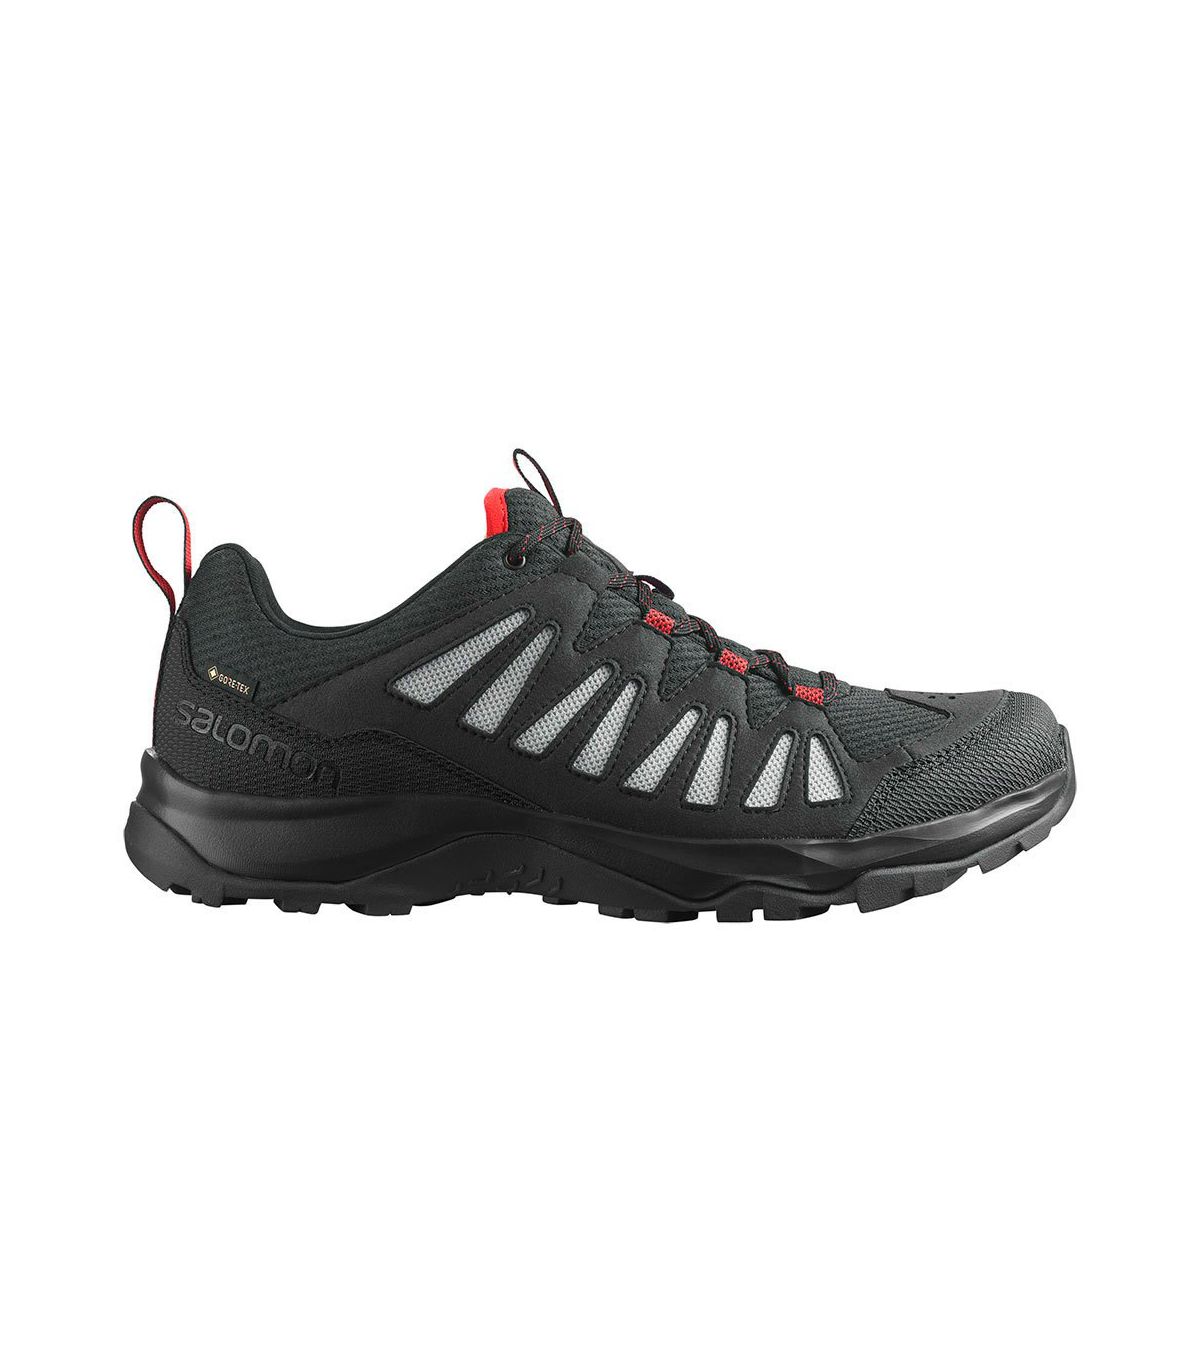 Zapatillas de Trail Salomon XA Pro 3D V9 Gore Tex Flint Stone/Black/Gray  Hombre